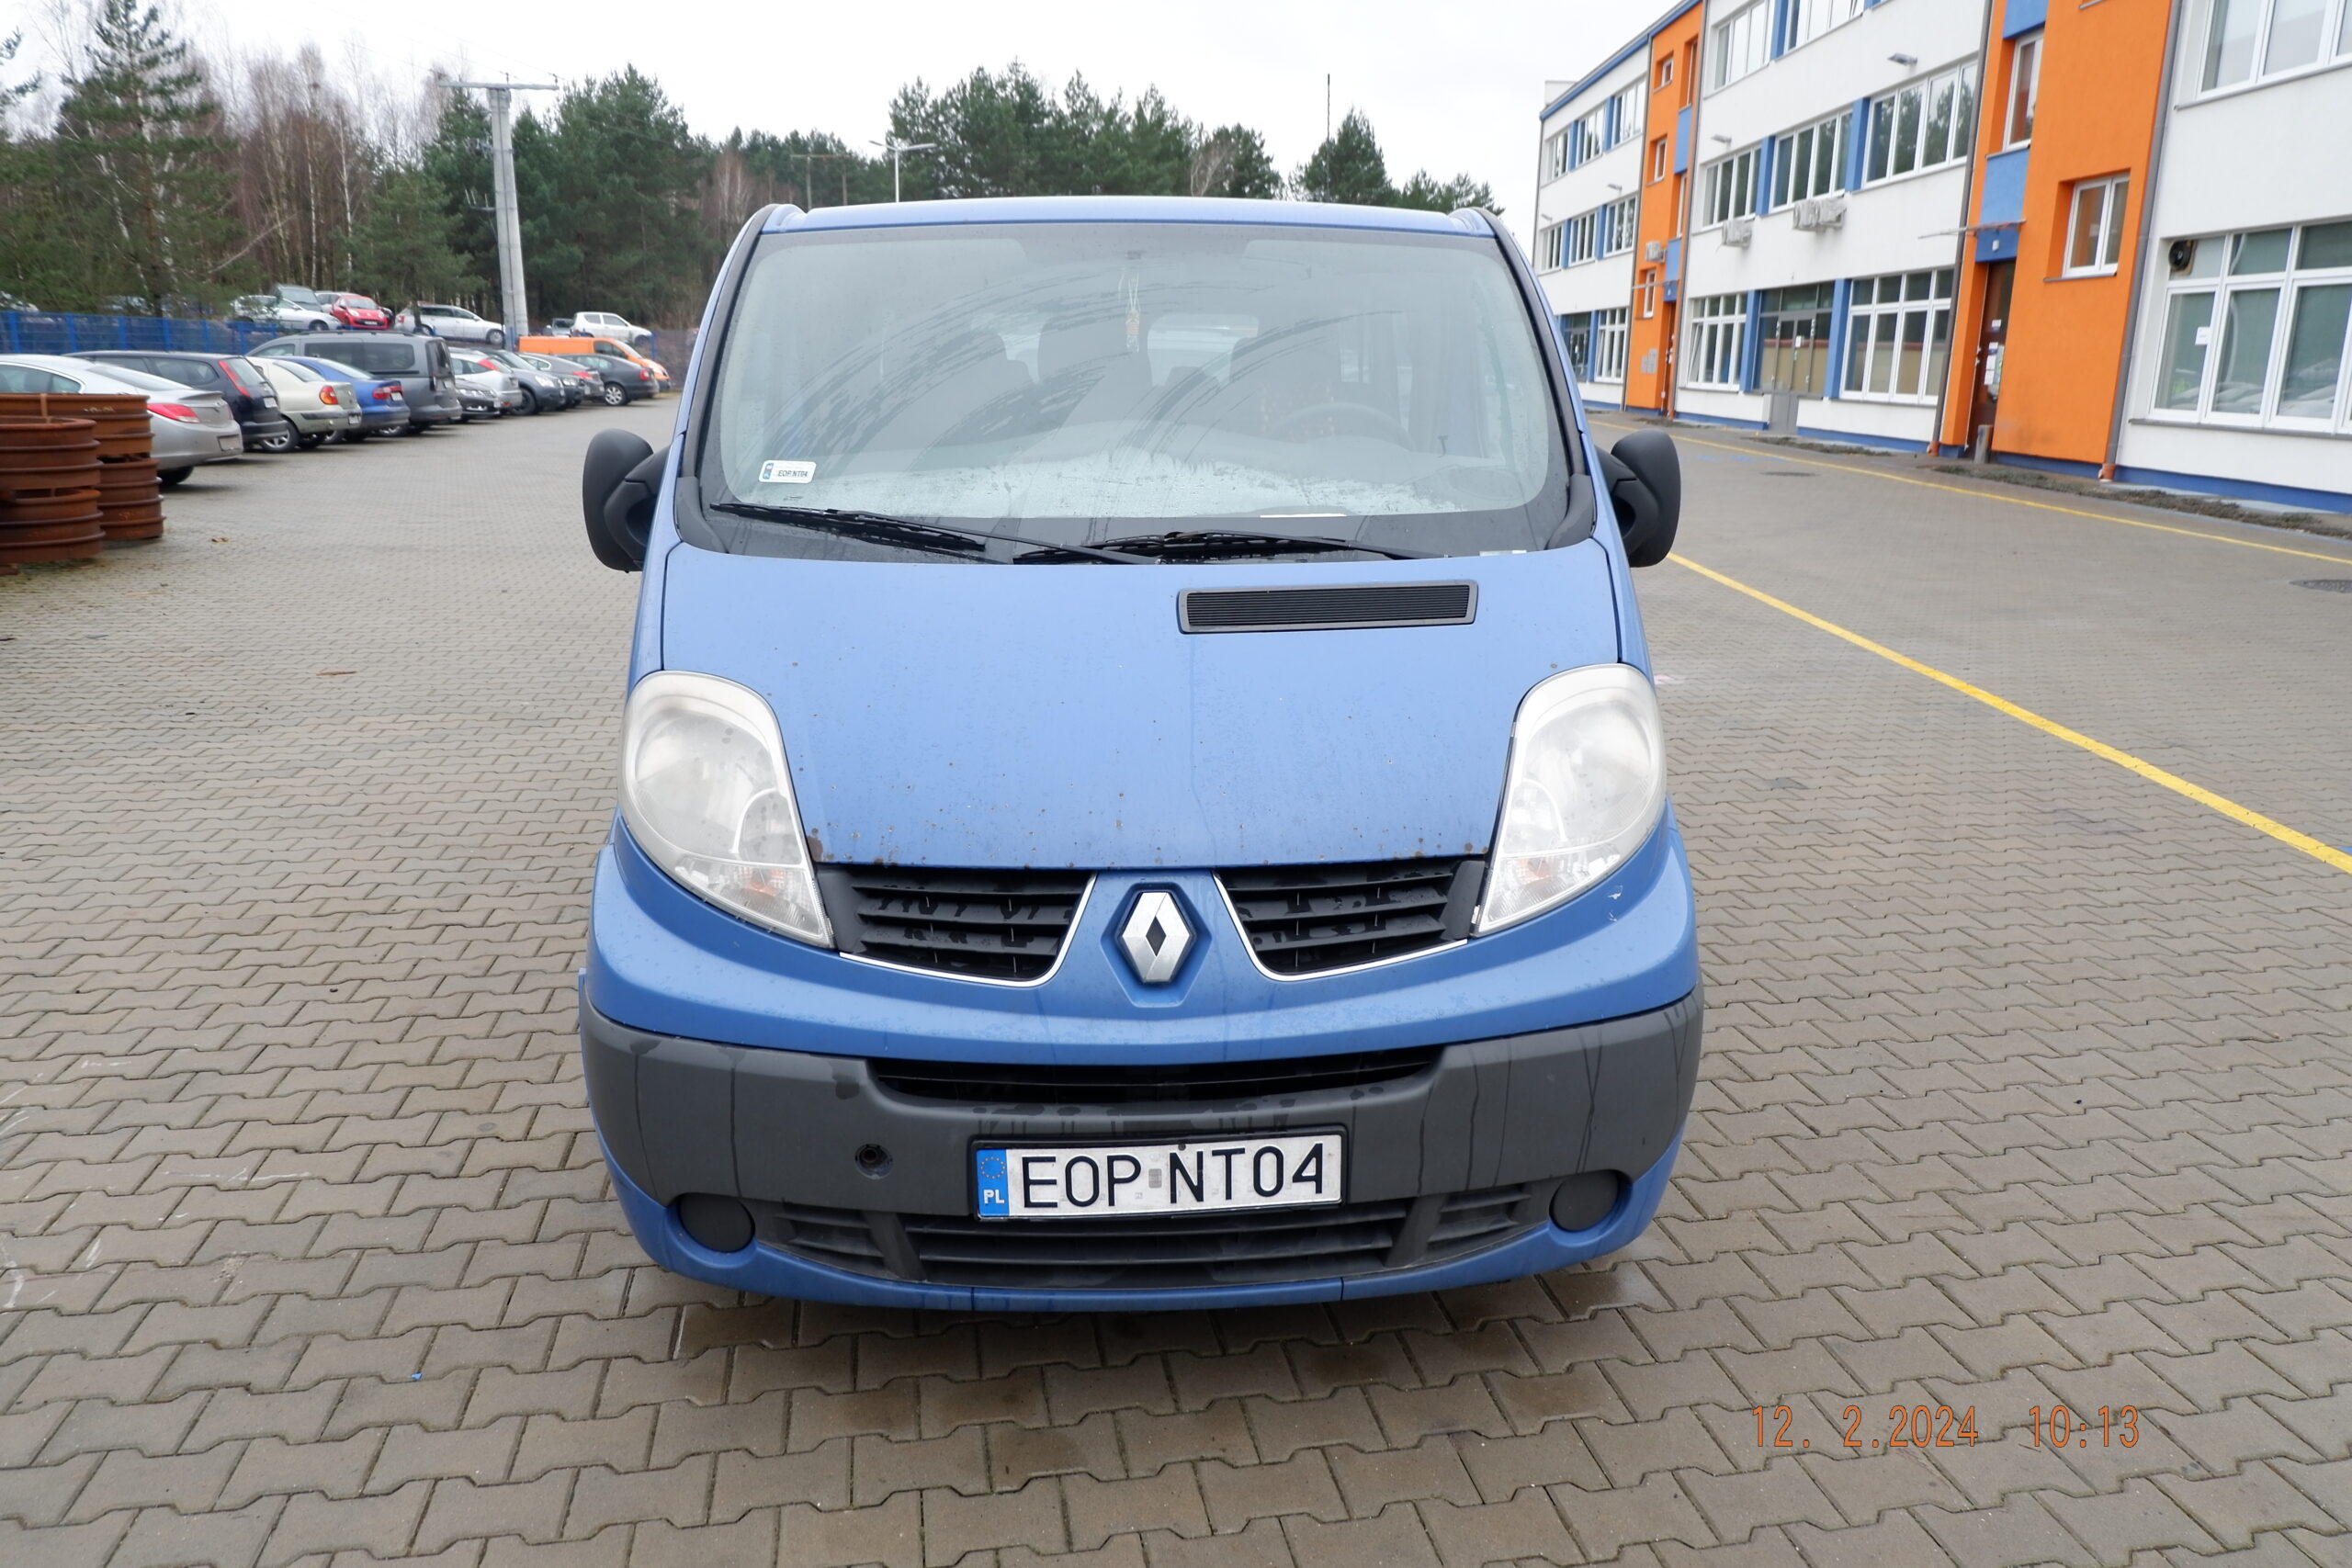 Renault Trafic 2,0 Diesel (84 kW), rok prod.: 2011